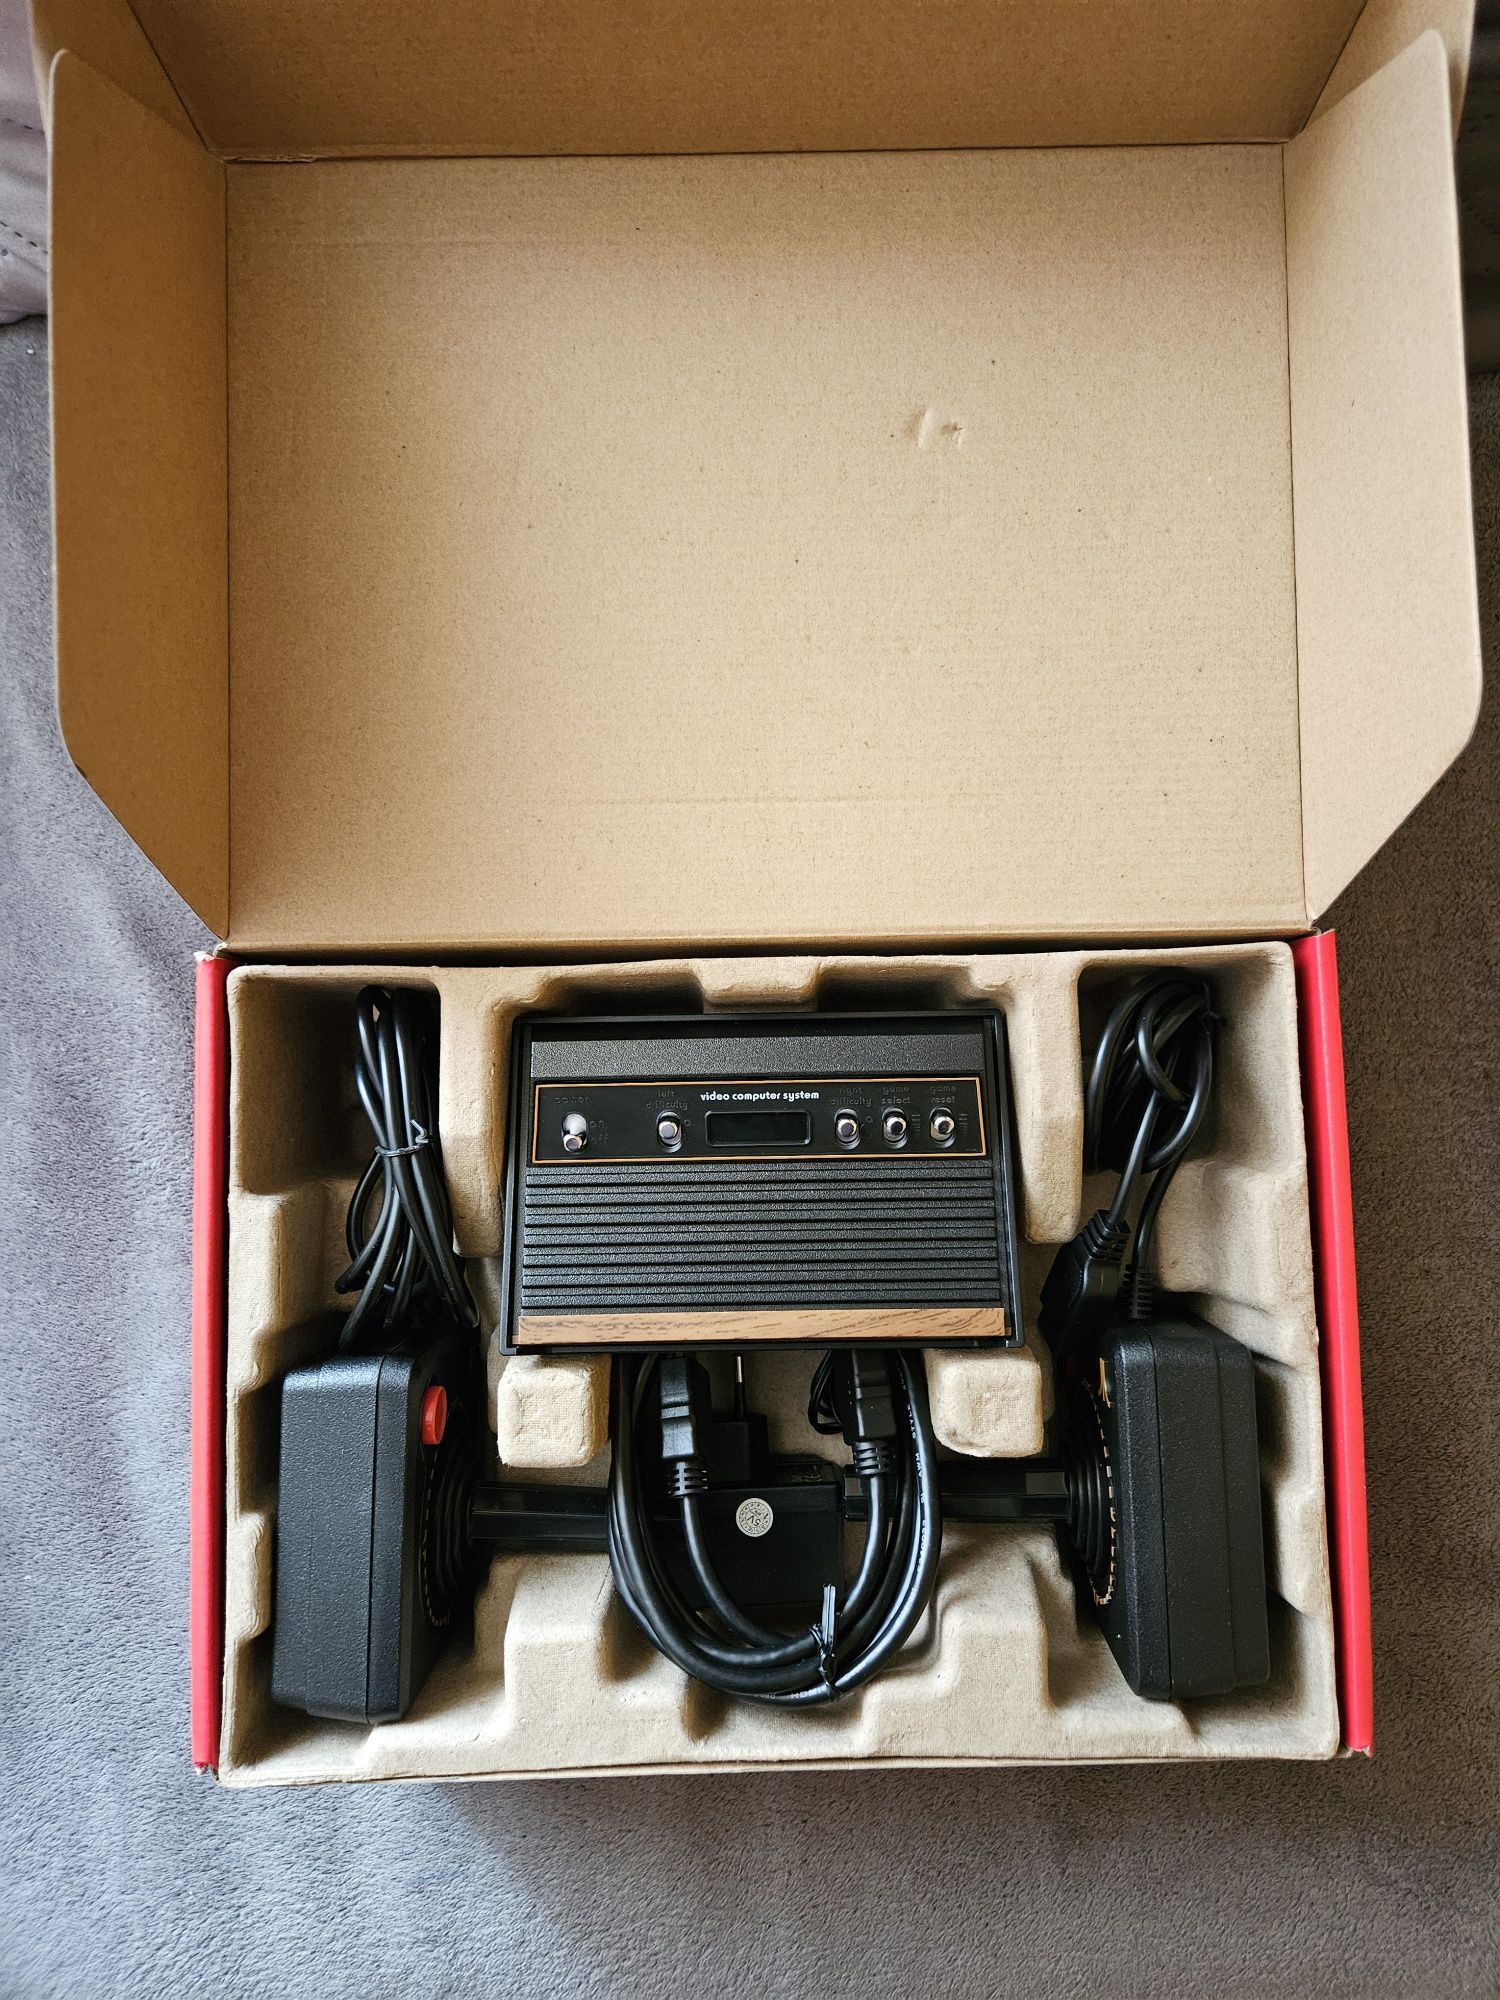 Mini konsolka Atari Flashback X jak nowa